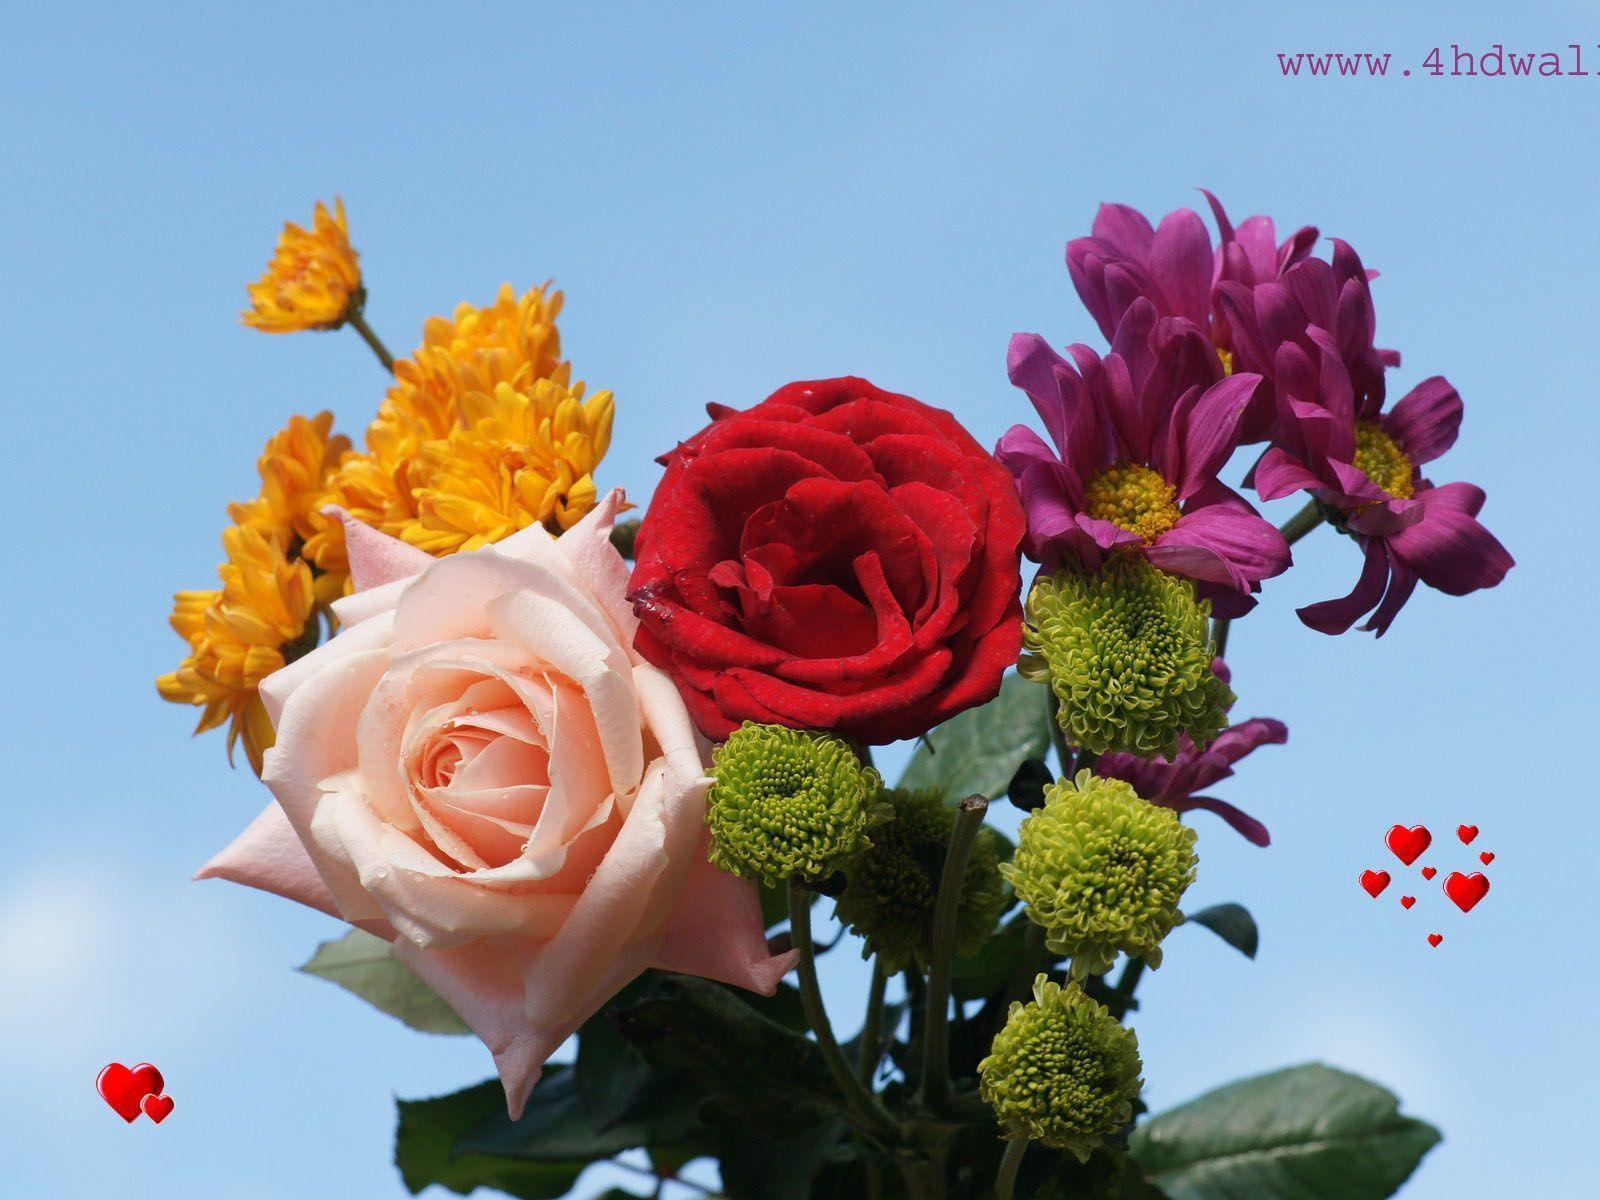 Beautiful rose flowers HD wallpaper for desktop. High Quality